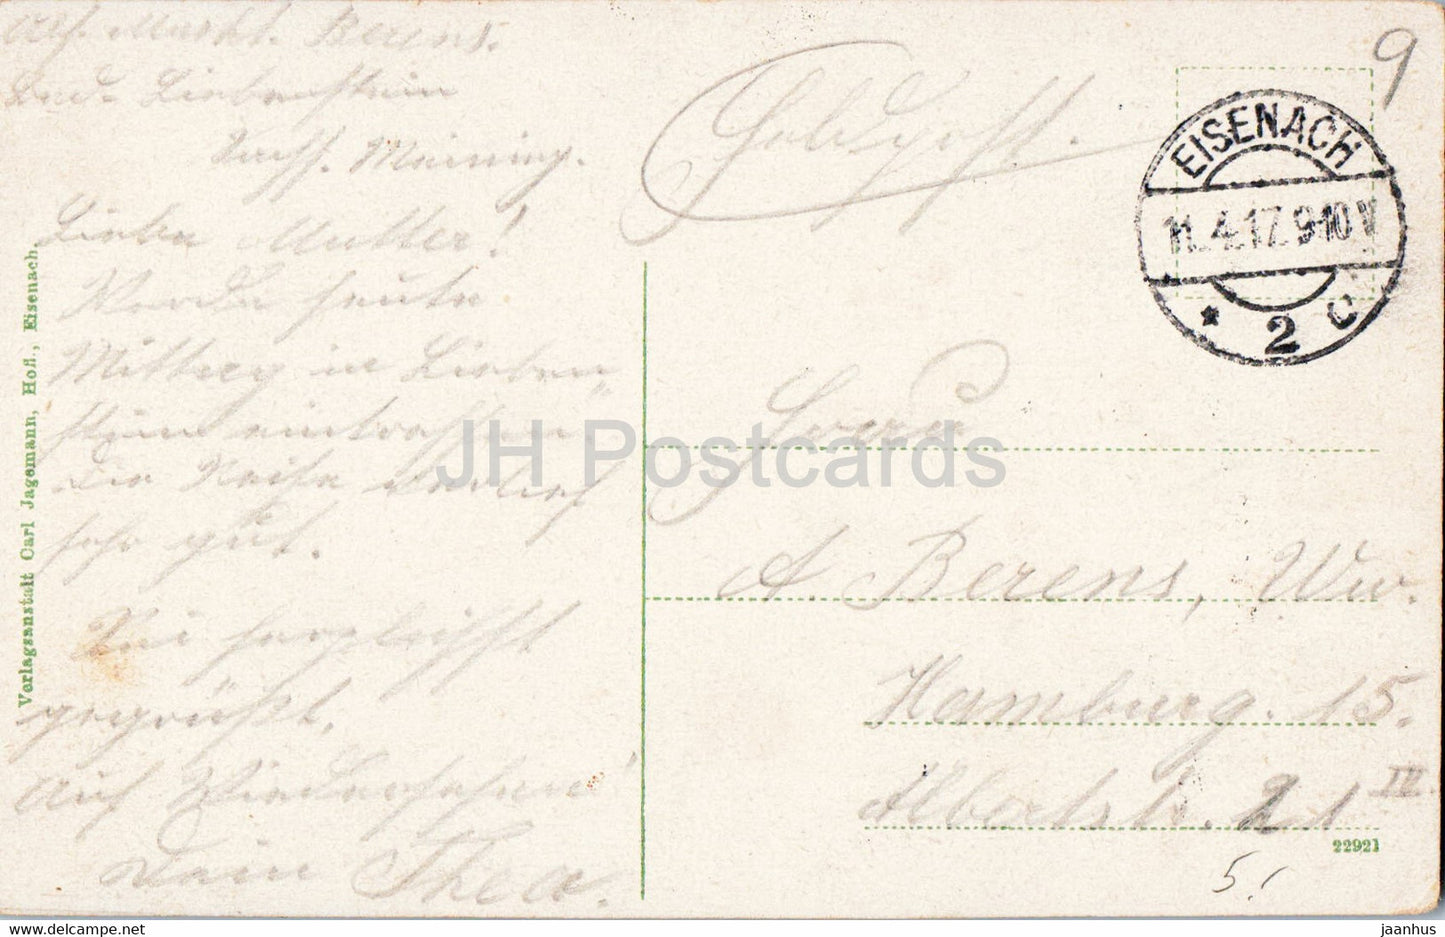 Eisenach - Das Lutherhaus - Feldpost - military mail - 22921 - old postcard - 1917 - Germany - used